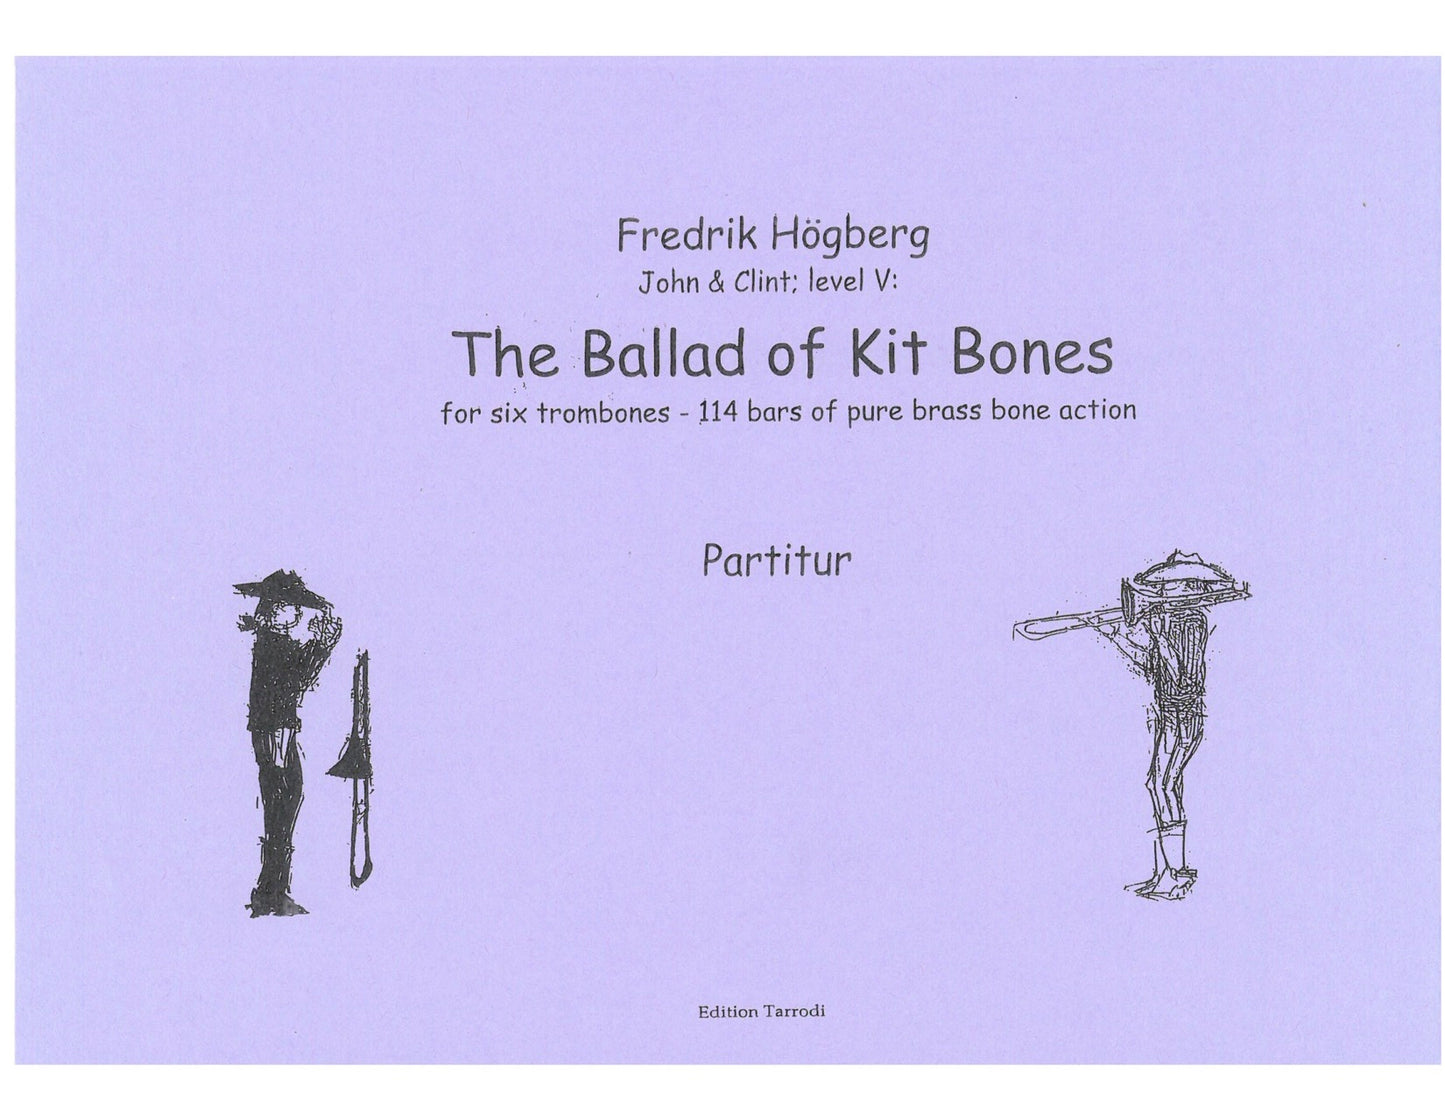 Fredrik Högberg - The Ballad of Kit Bones